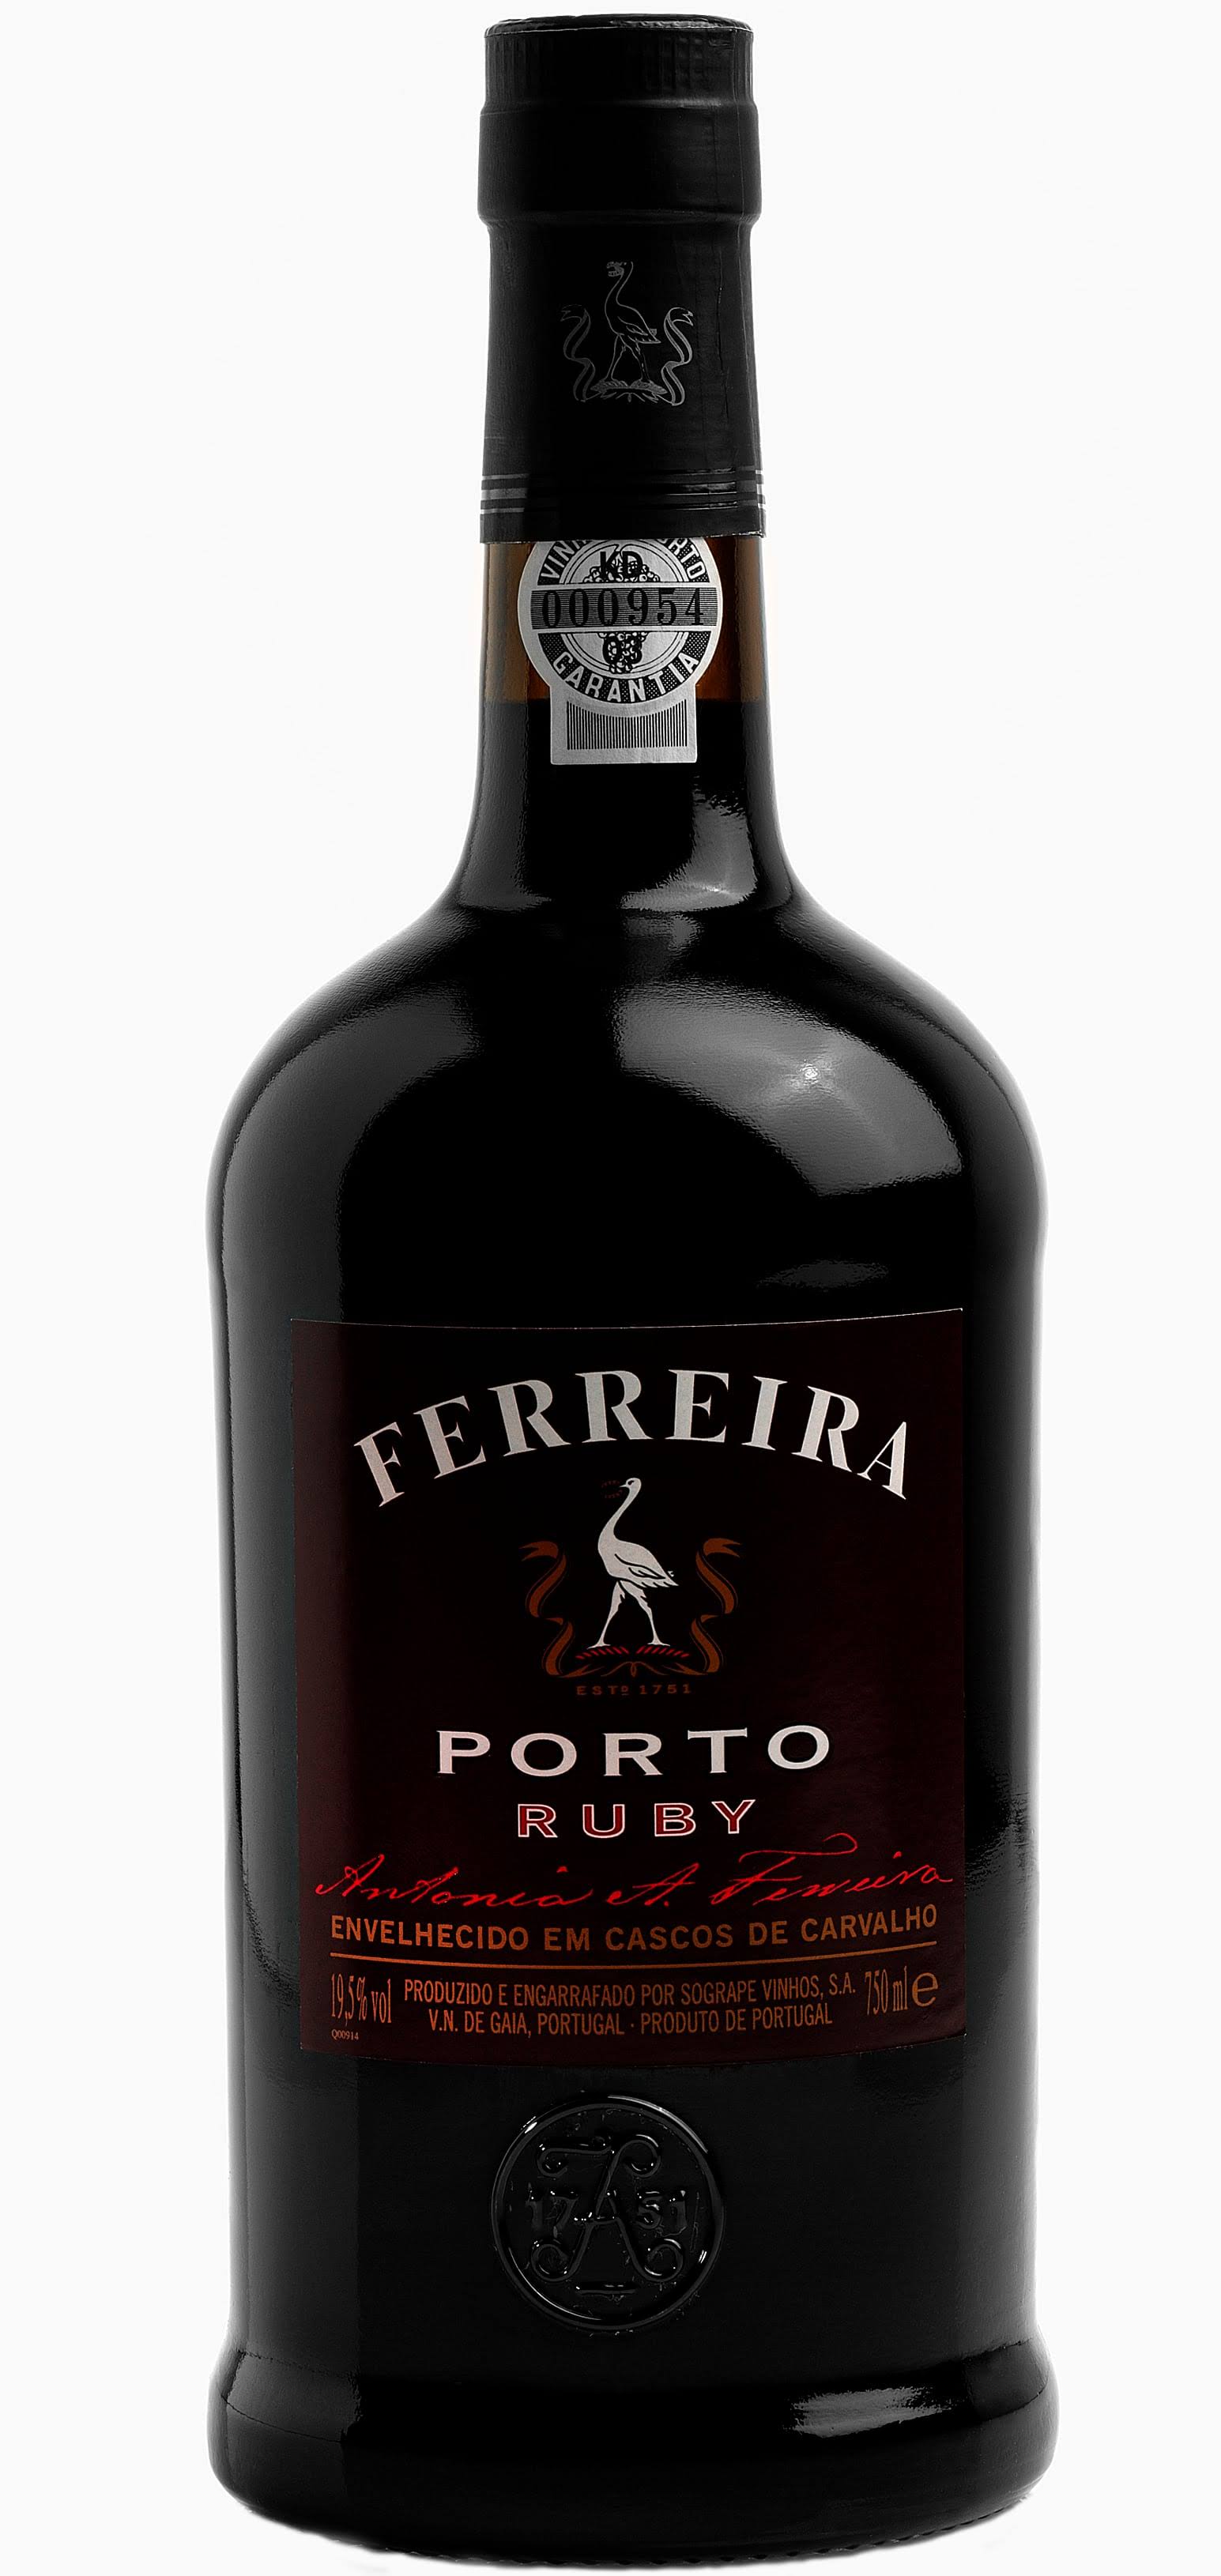 Ferreira 10 Year Old Ruby Porto - 750 ml bottle